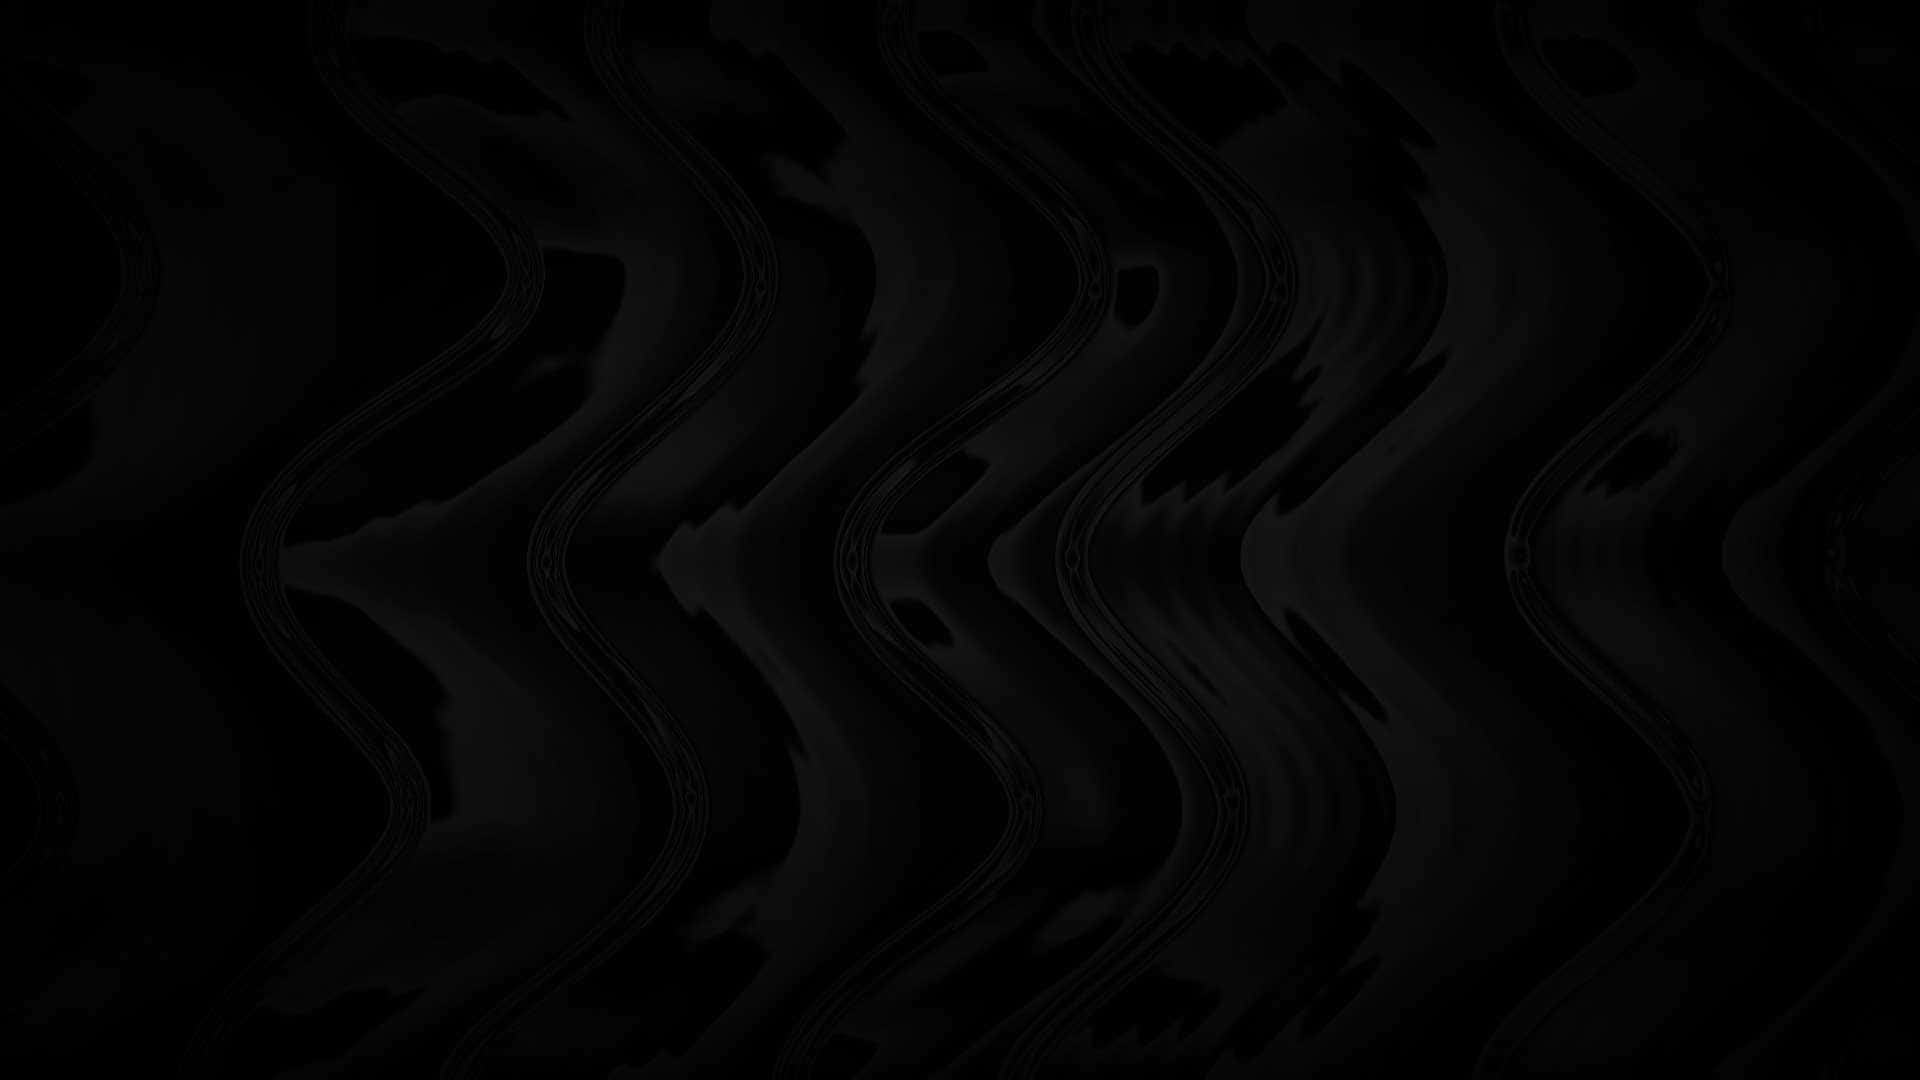 Plain Black Desktop With Wavy Patterns Wallpaper